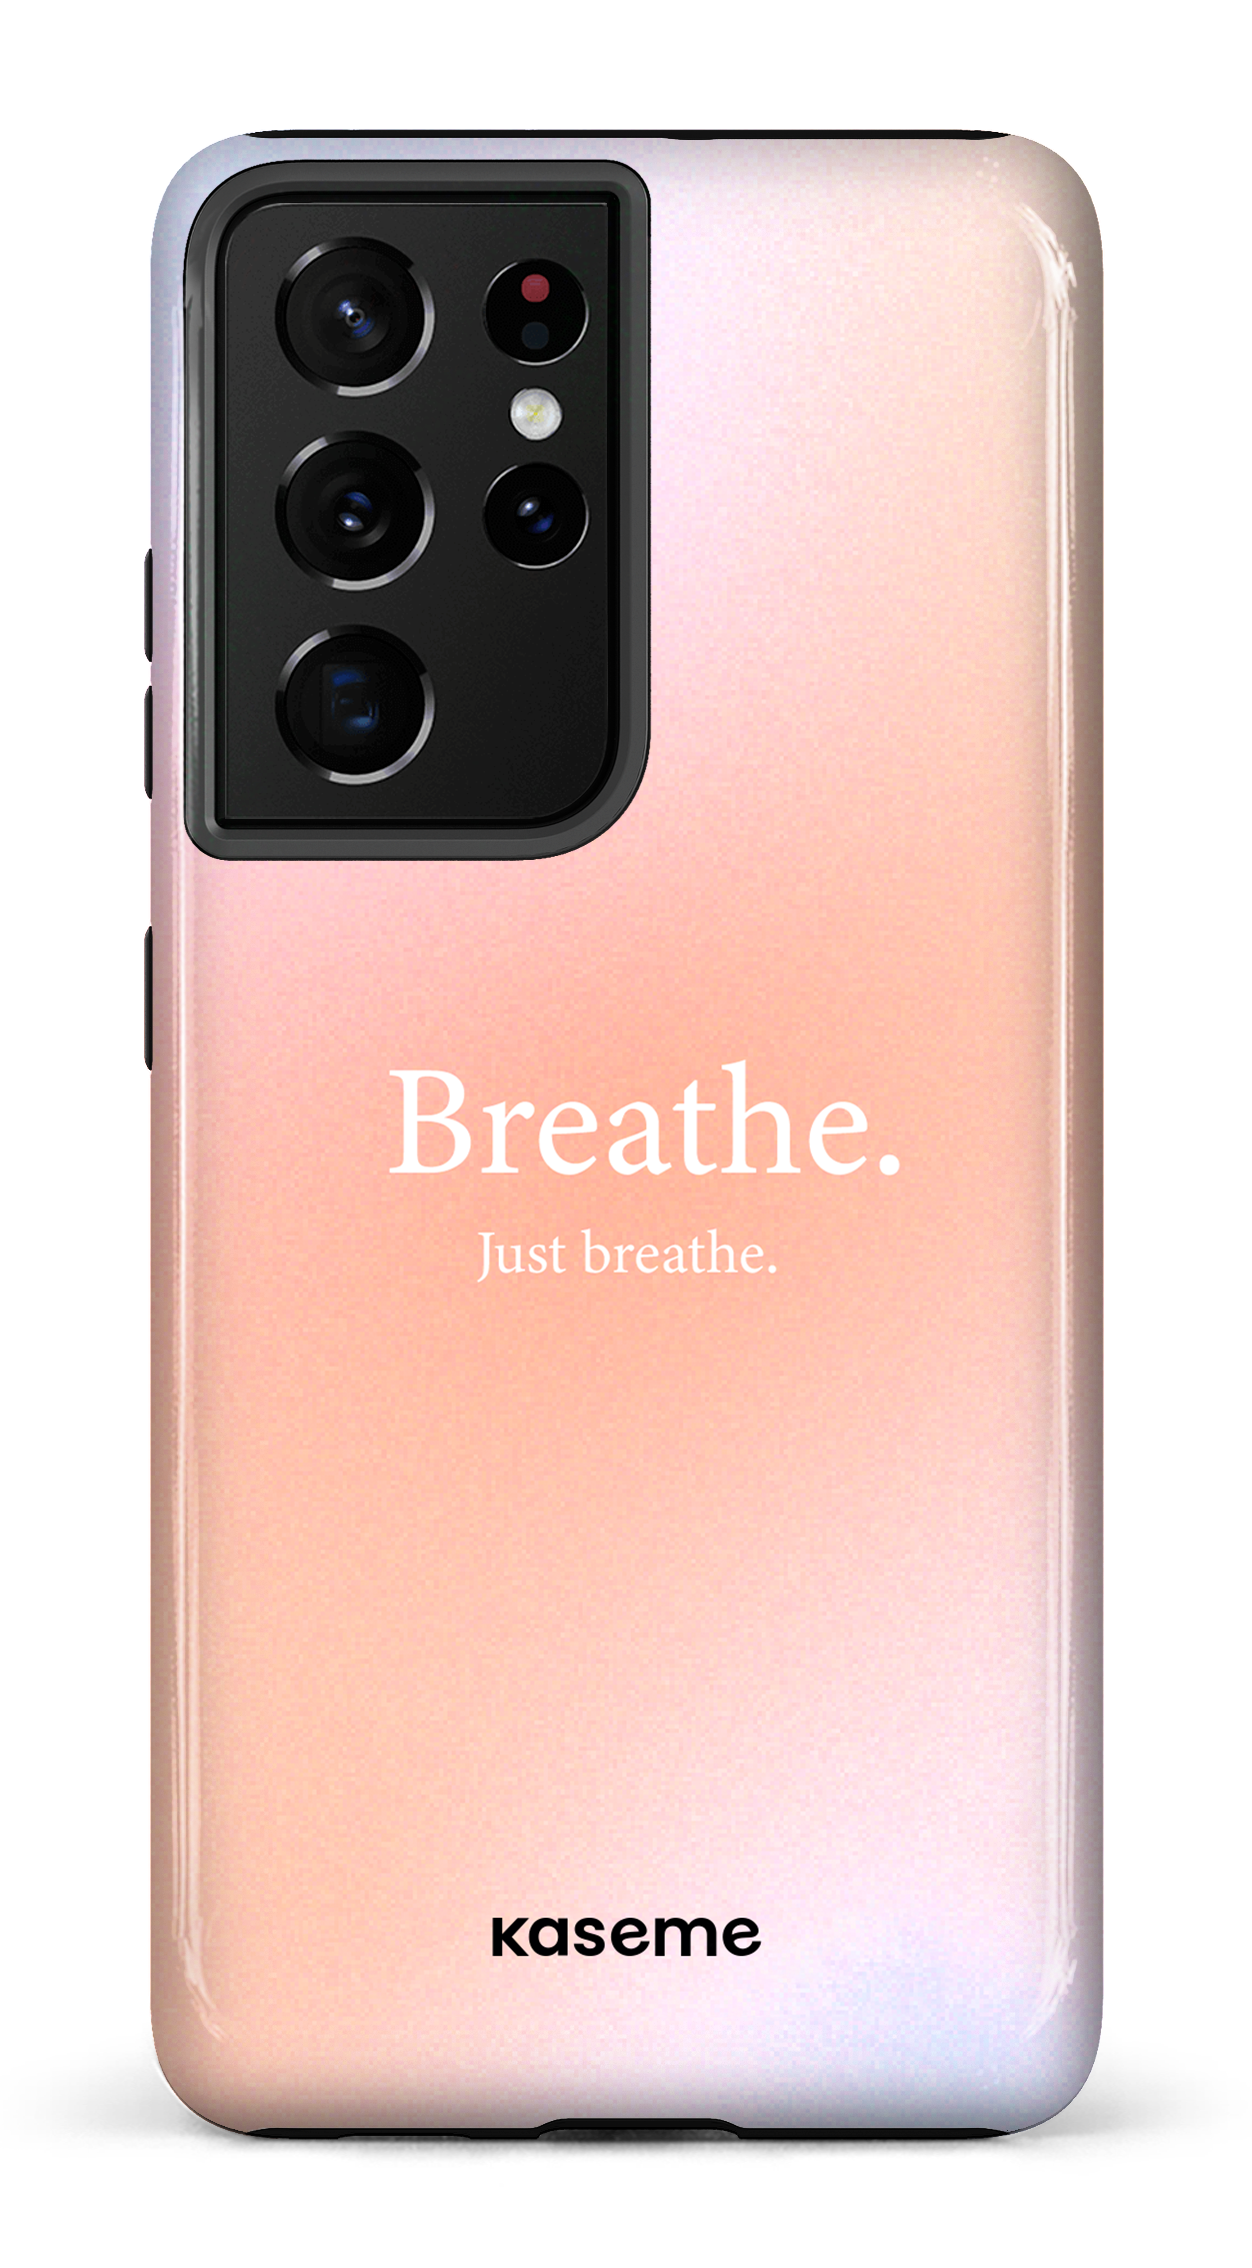 Just breathe - Galaxy S21 Ultra